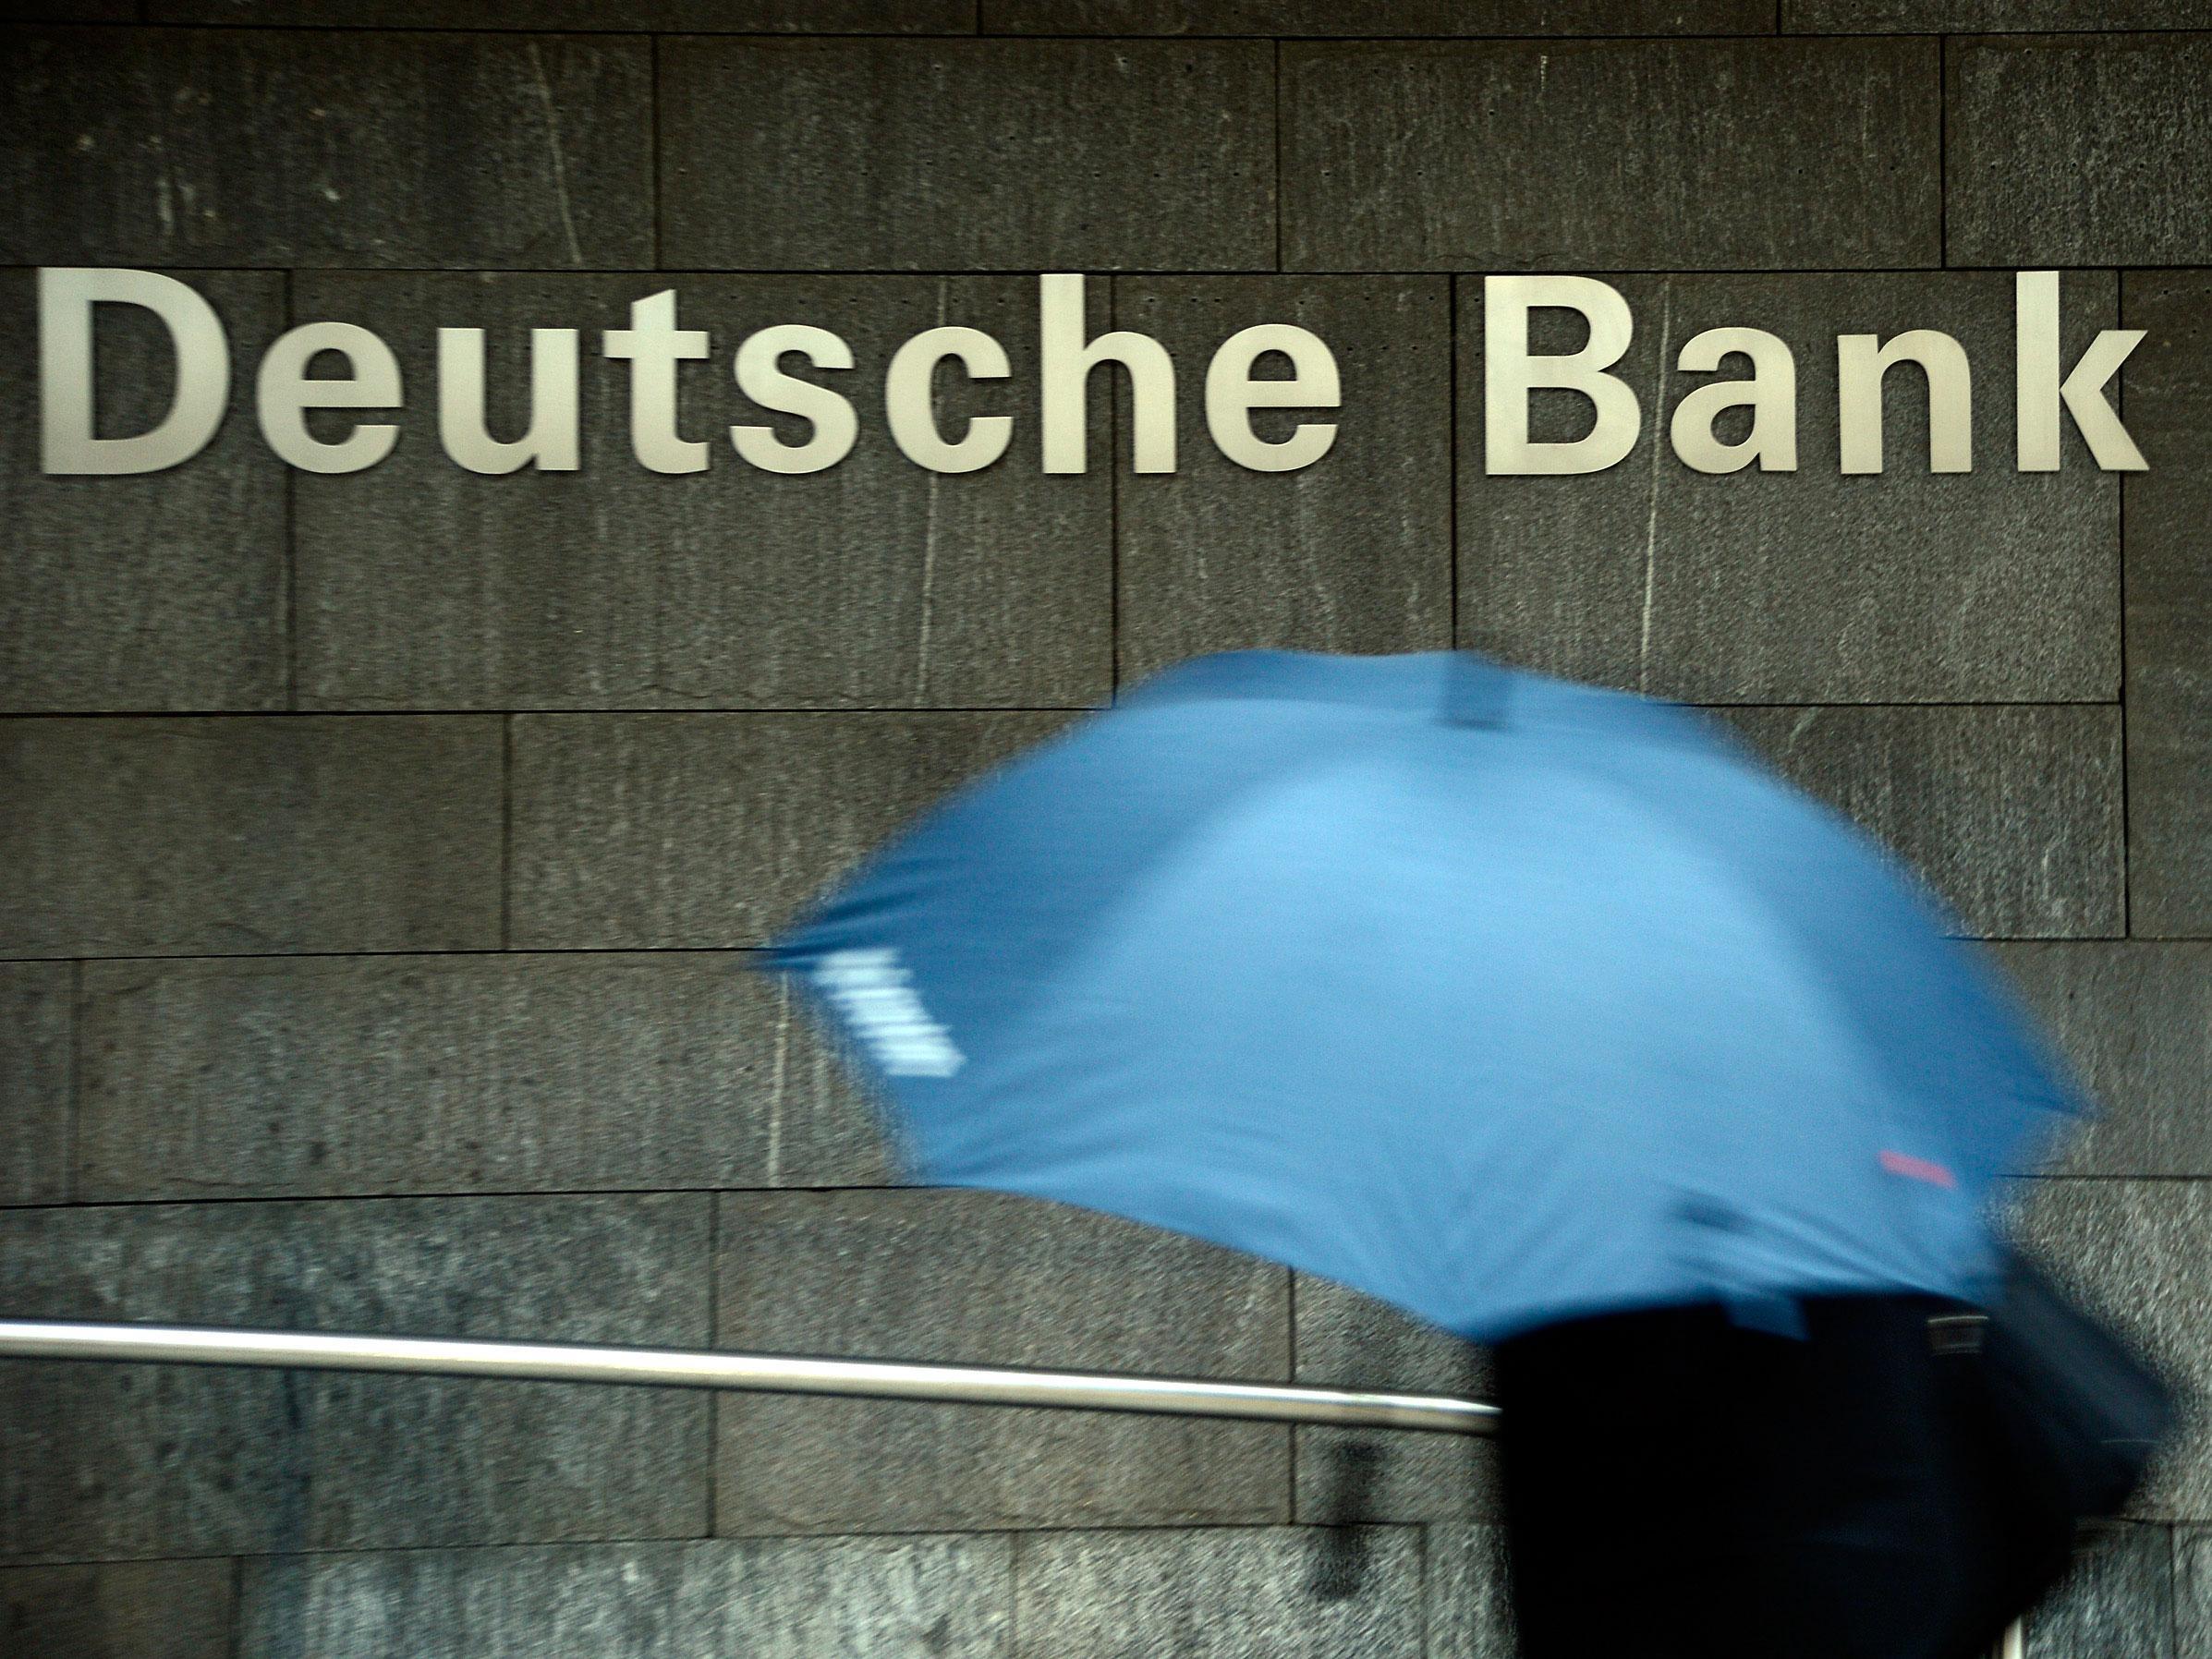 Deutsche Bank Profits Slide As Trading Revenue Slumps And More Cuts